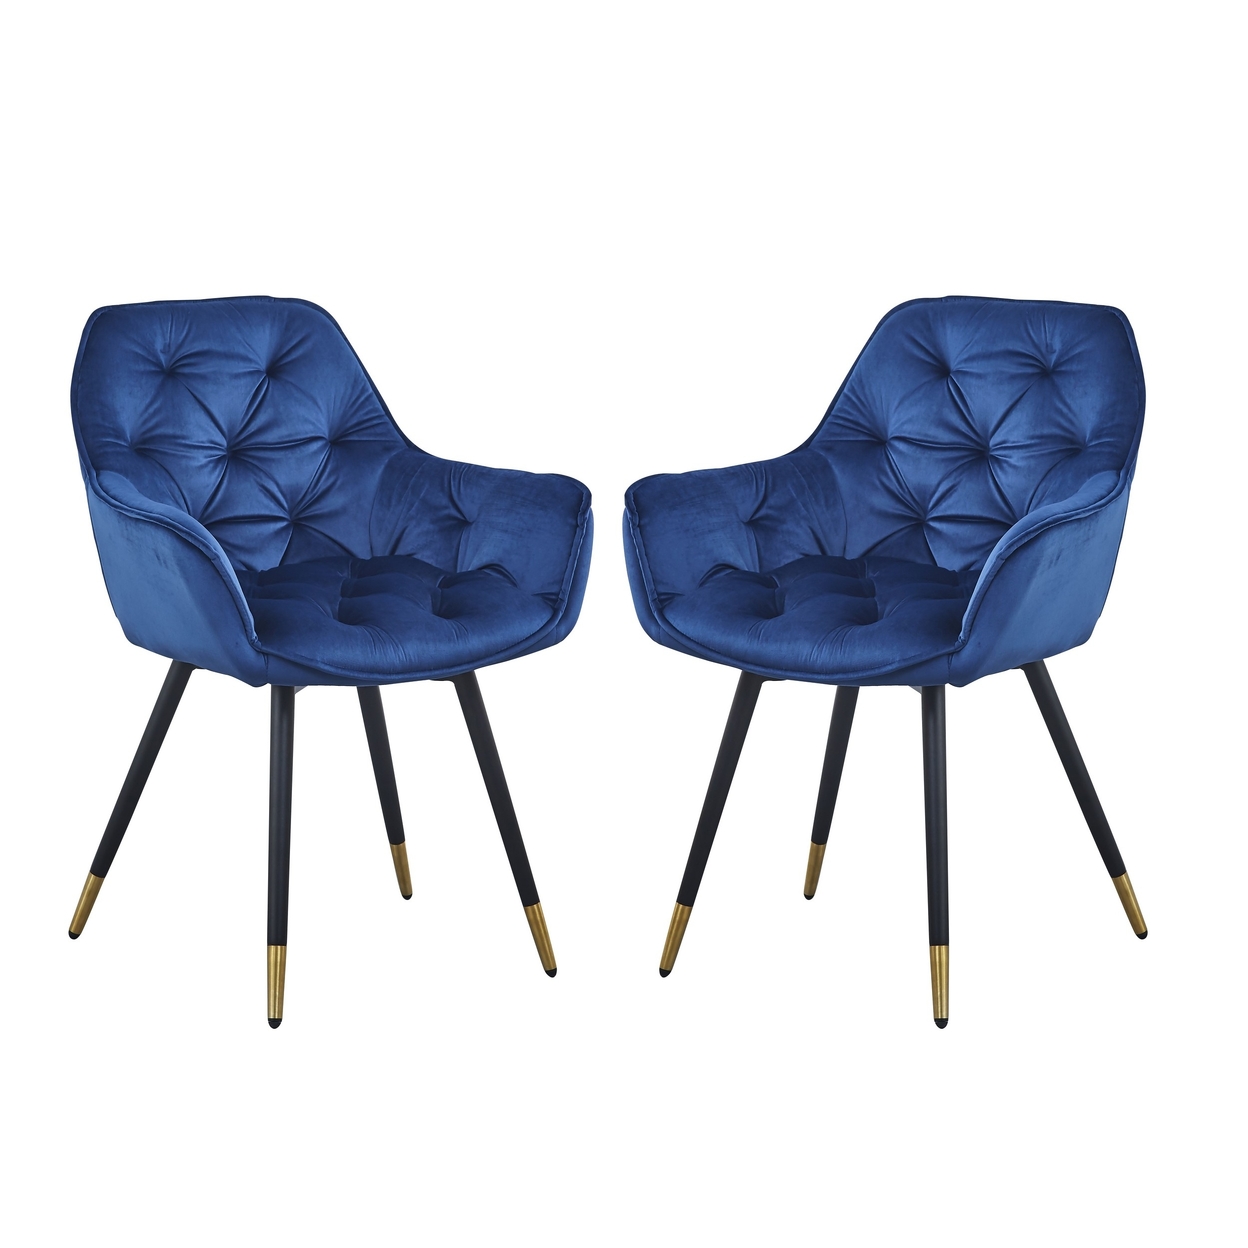 Alix 25 Inch Modern Dining Chair, Button Tufted, Set Of 2, Blue, Black- Saltoro Sherpi